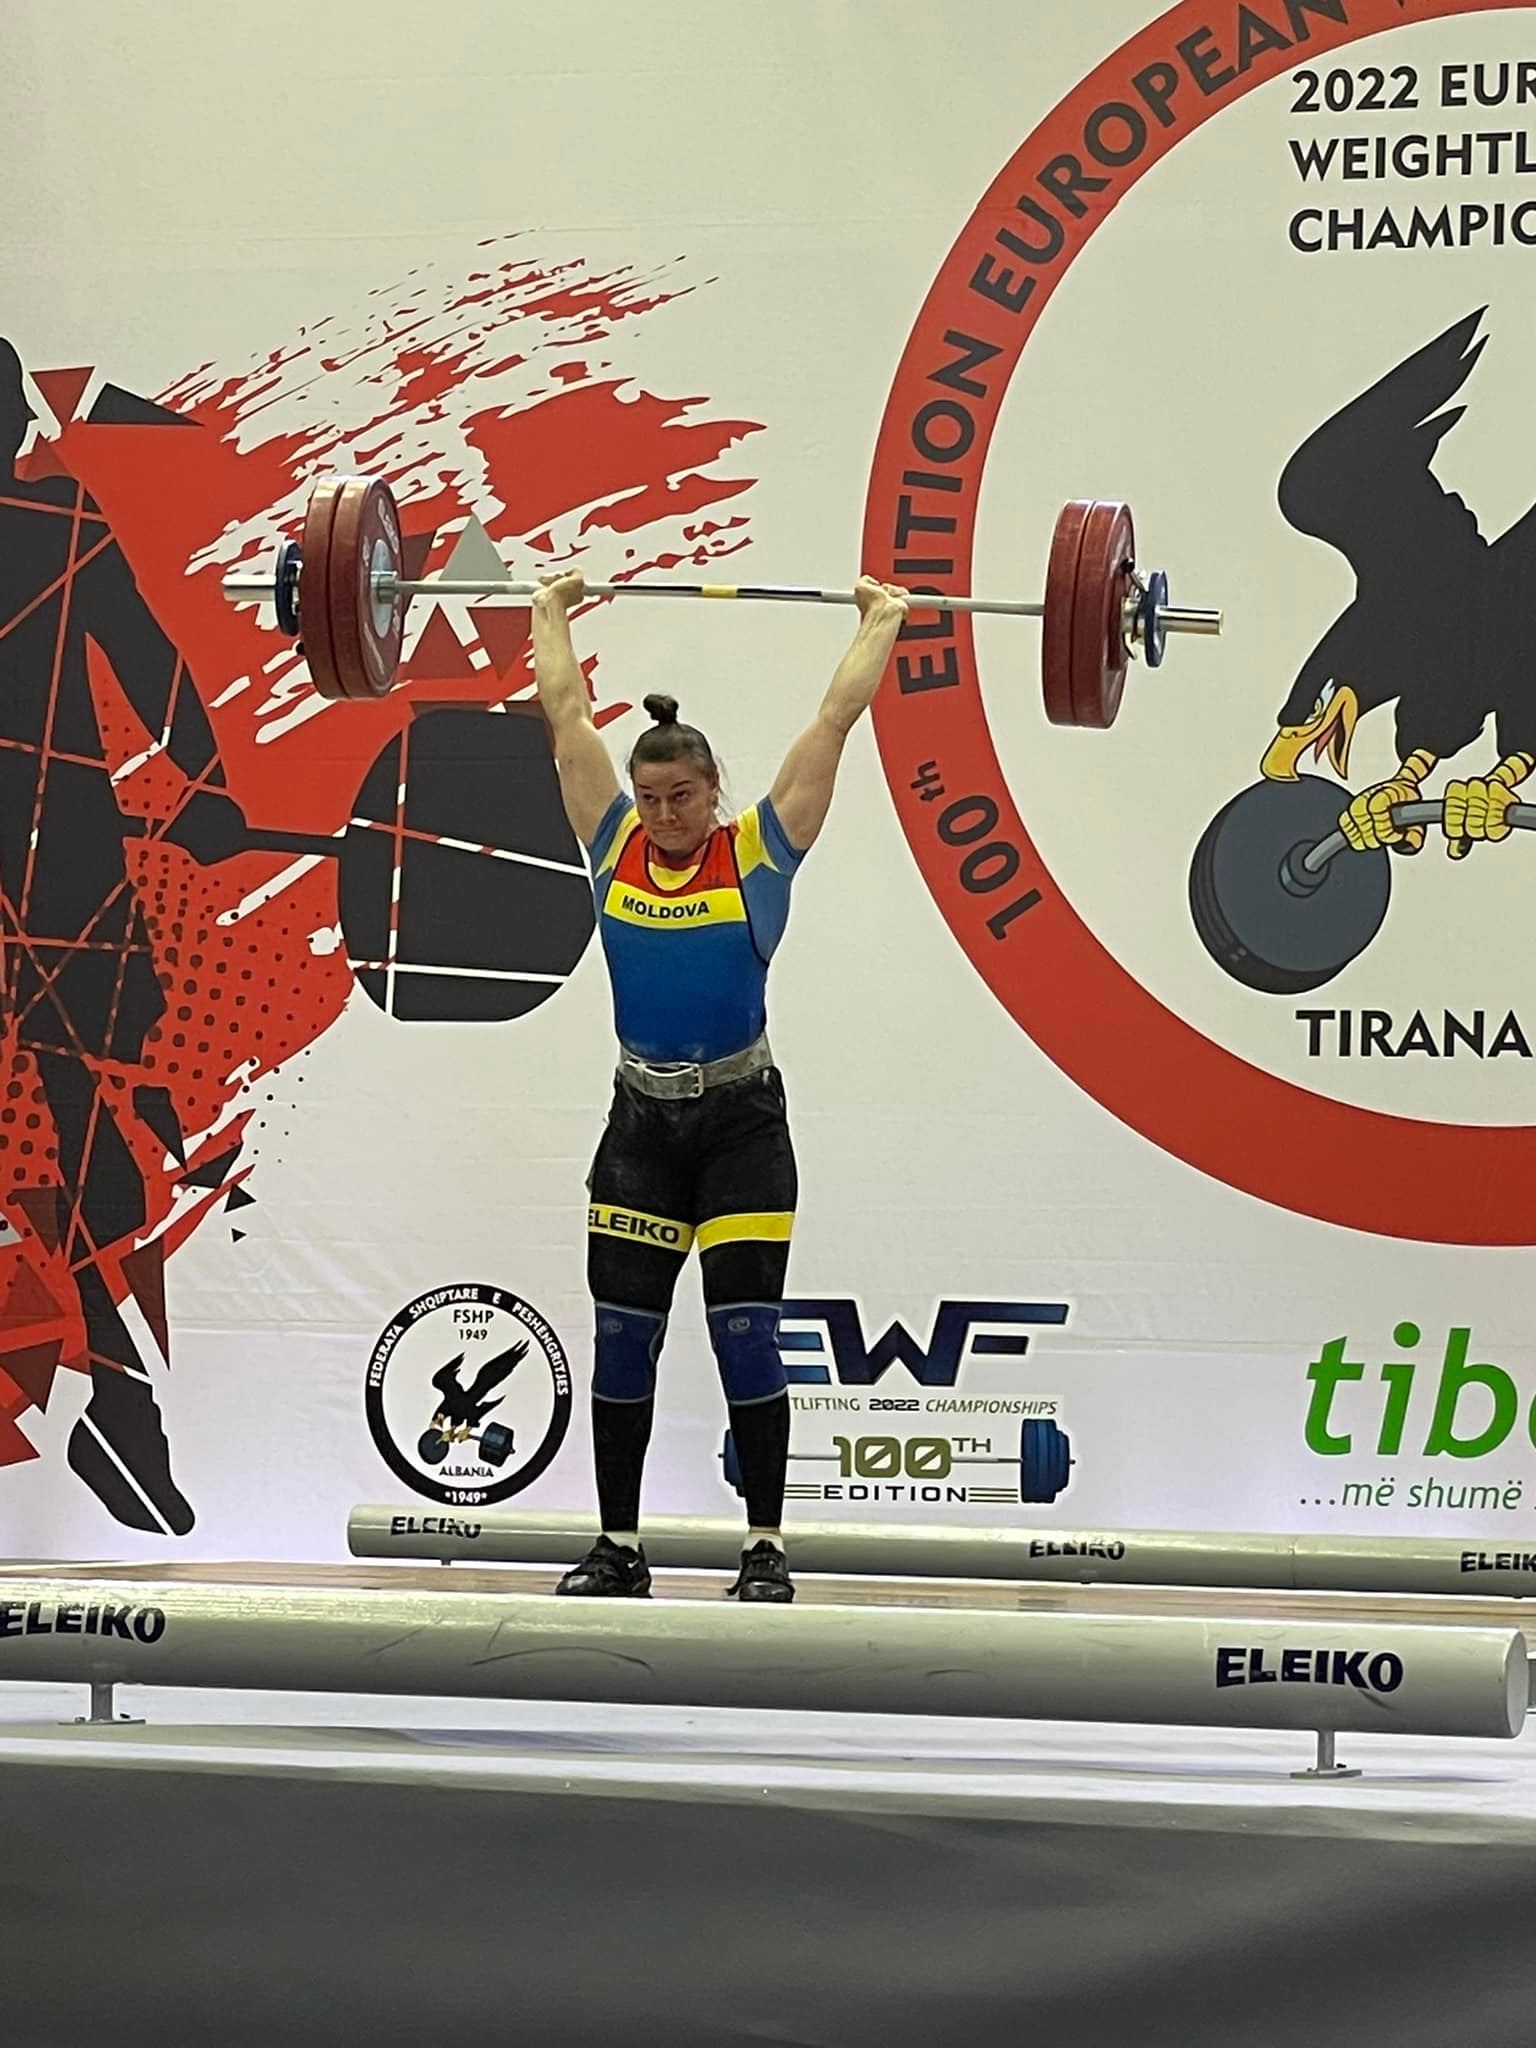 FOTO O halterofilă moldoveancă a luat medalia de bronz la Campionatul European de la Tirana